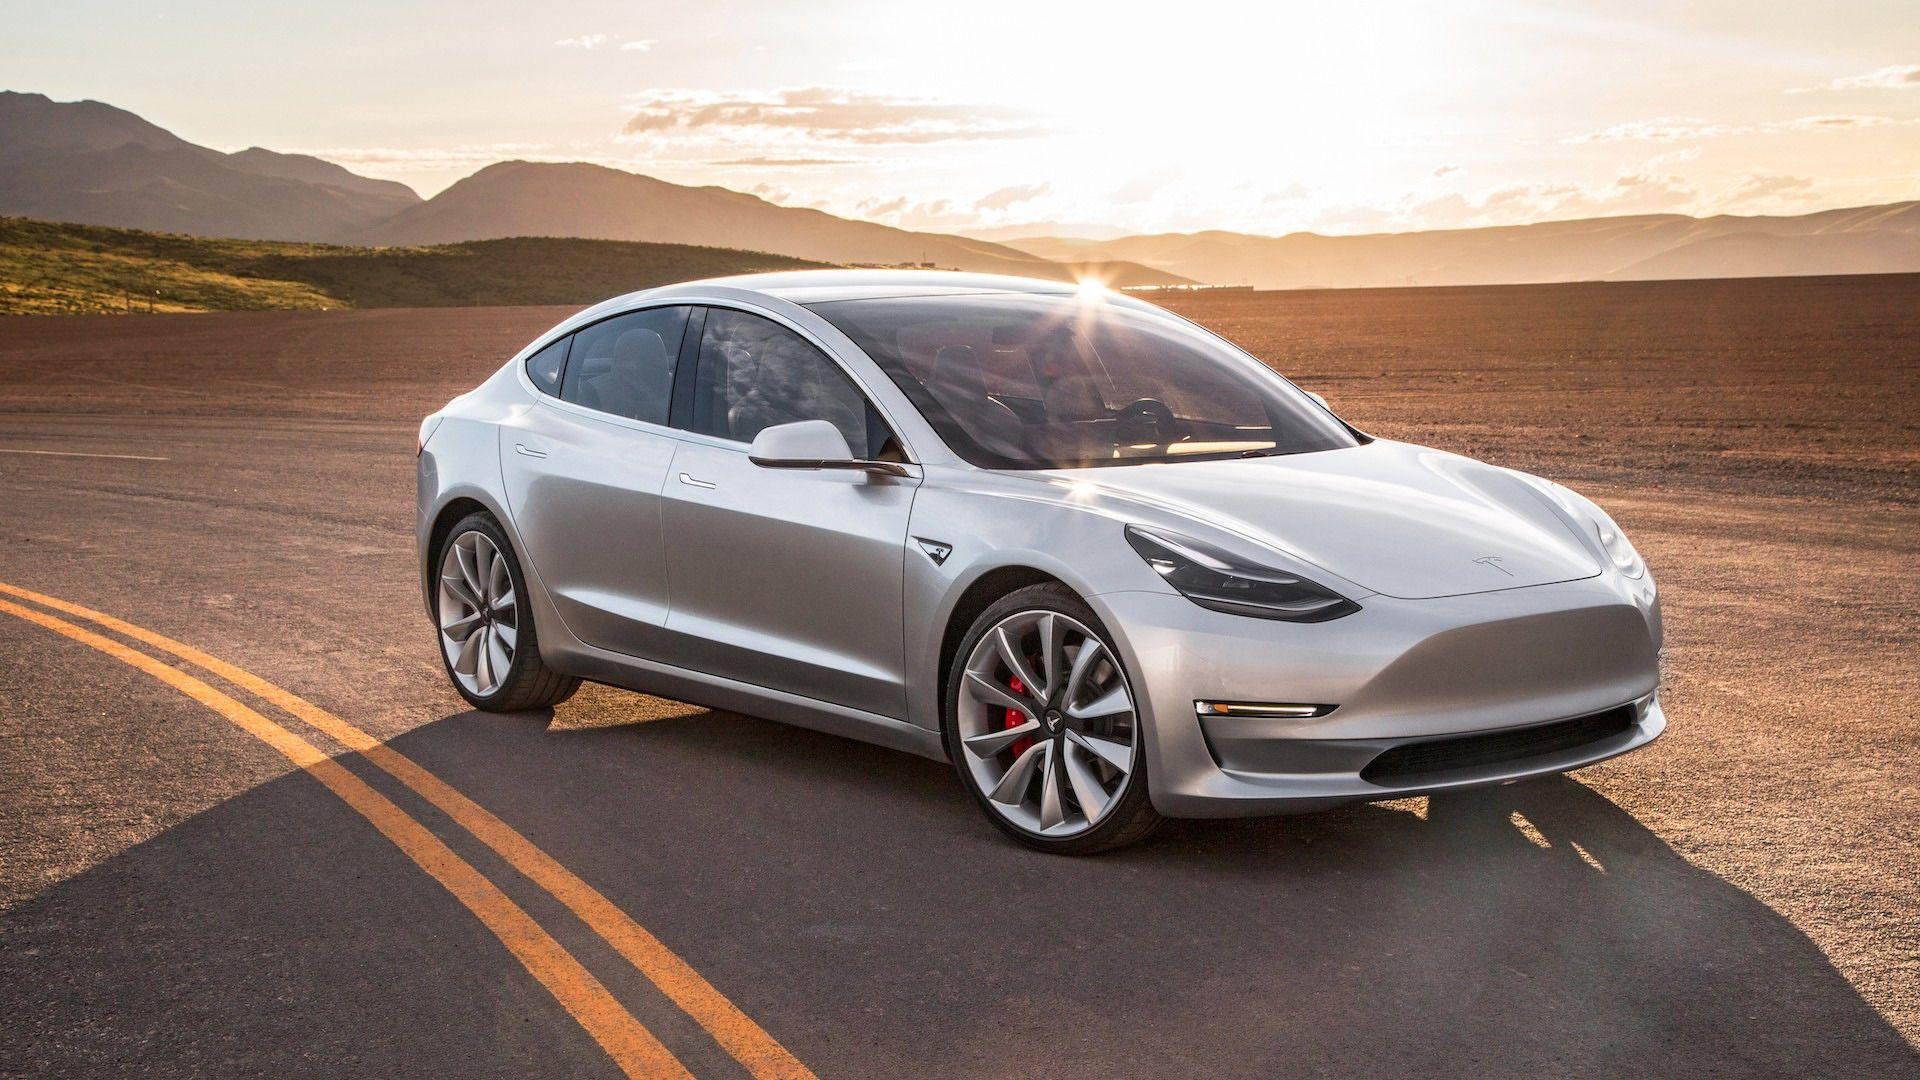 Tesla raises $1.2 billion for Model 3 launch